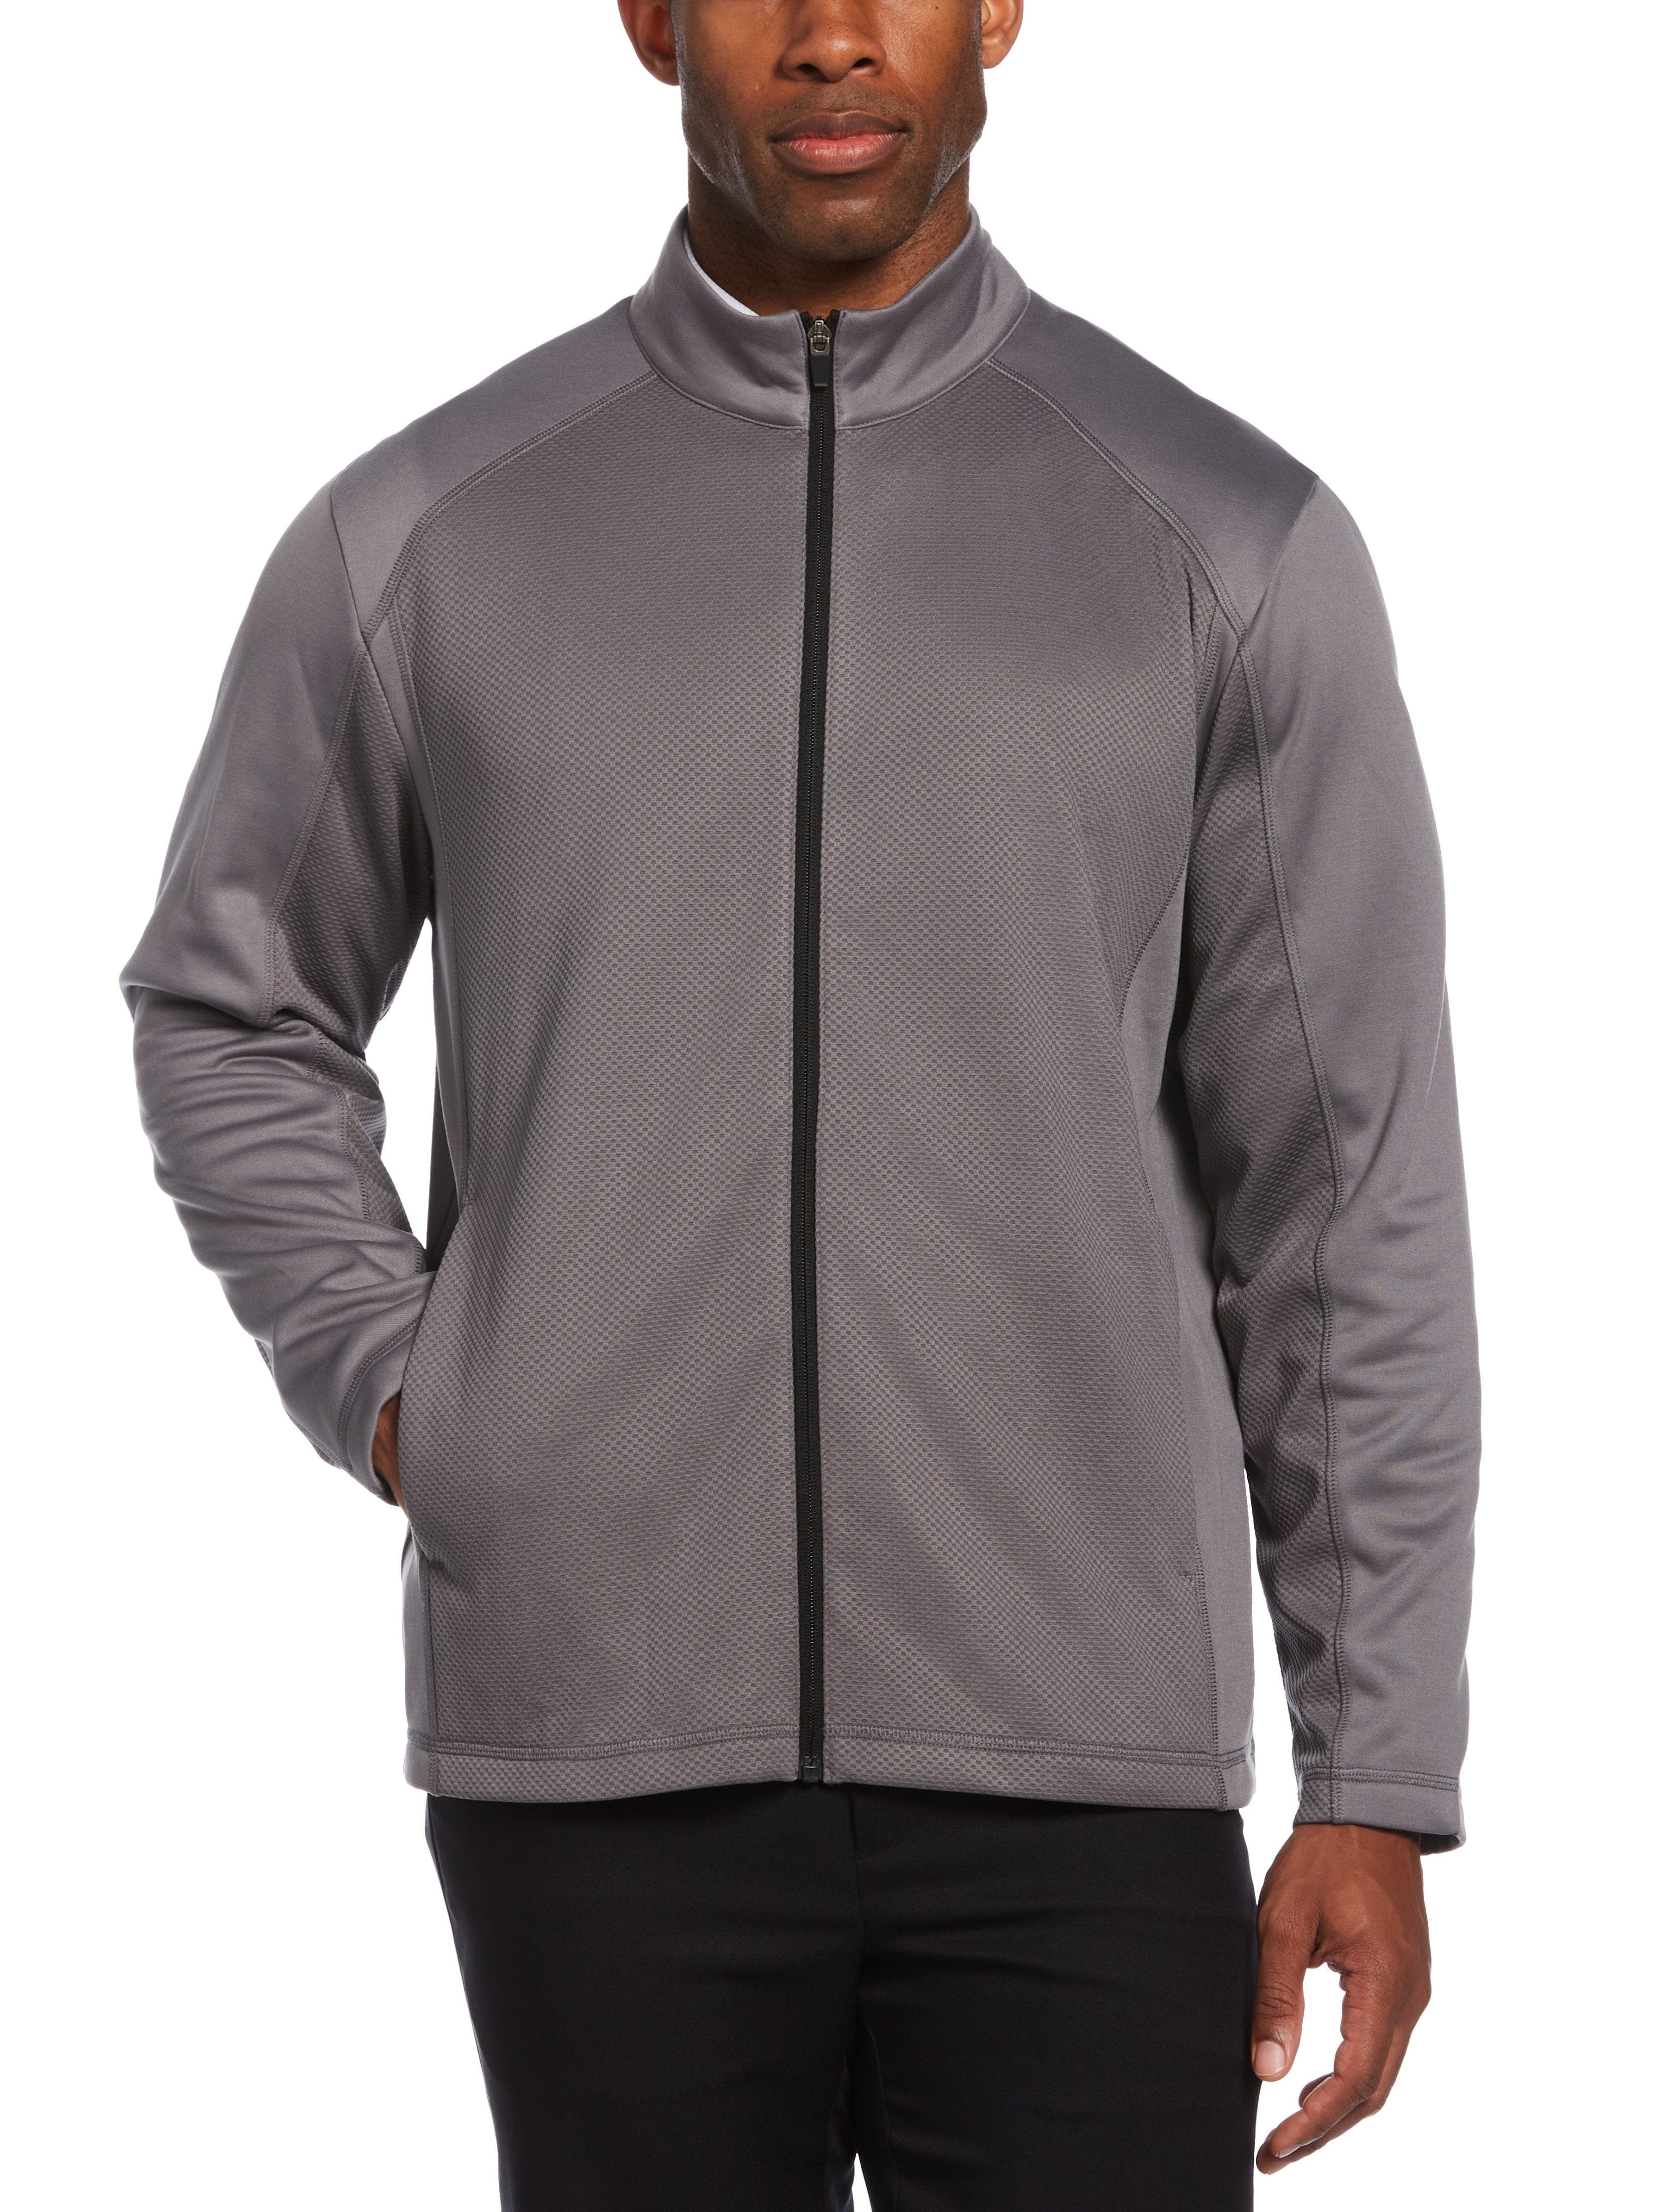 PGA TOUR Apparel Mens Mixed Texture Fleece Golf Jacket Top, Size XL, Quiet Shade Gray, 100% Polyester | Golf Apparel Shop